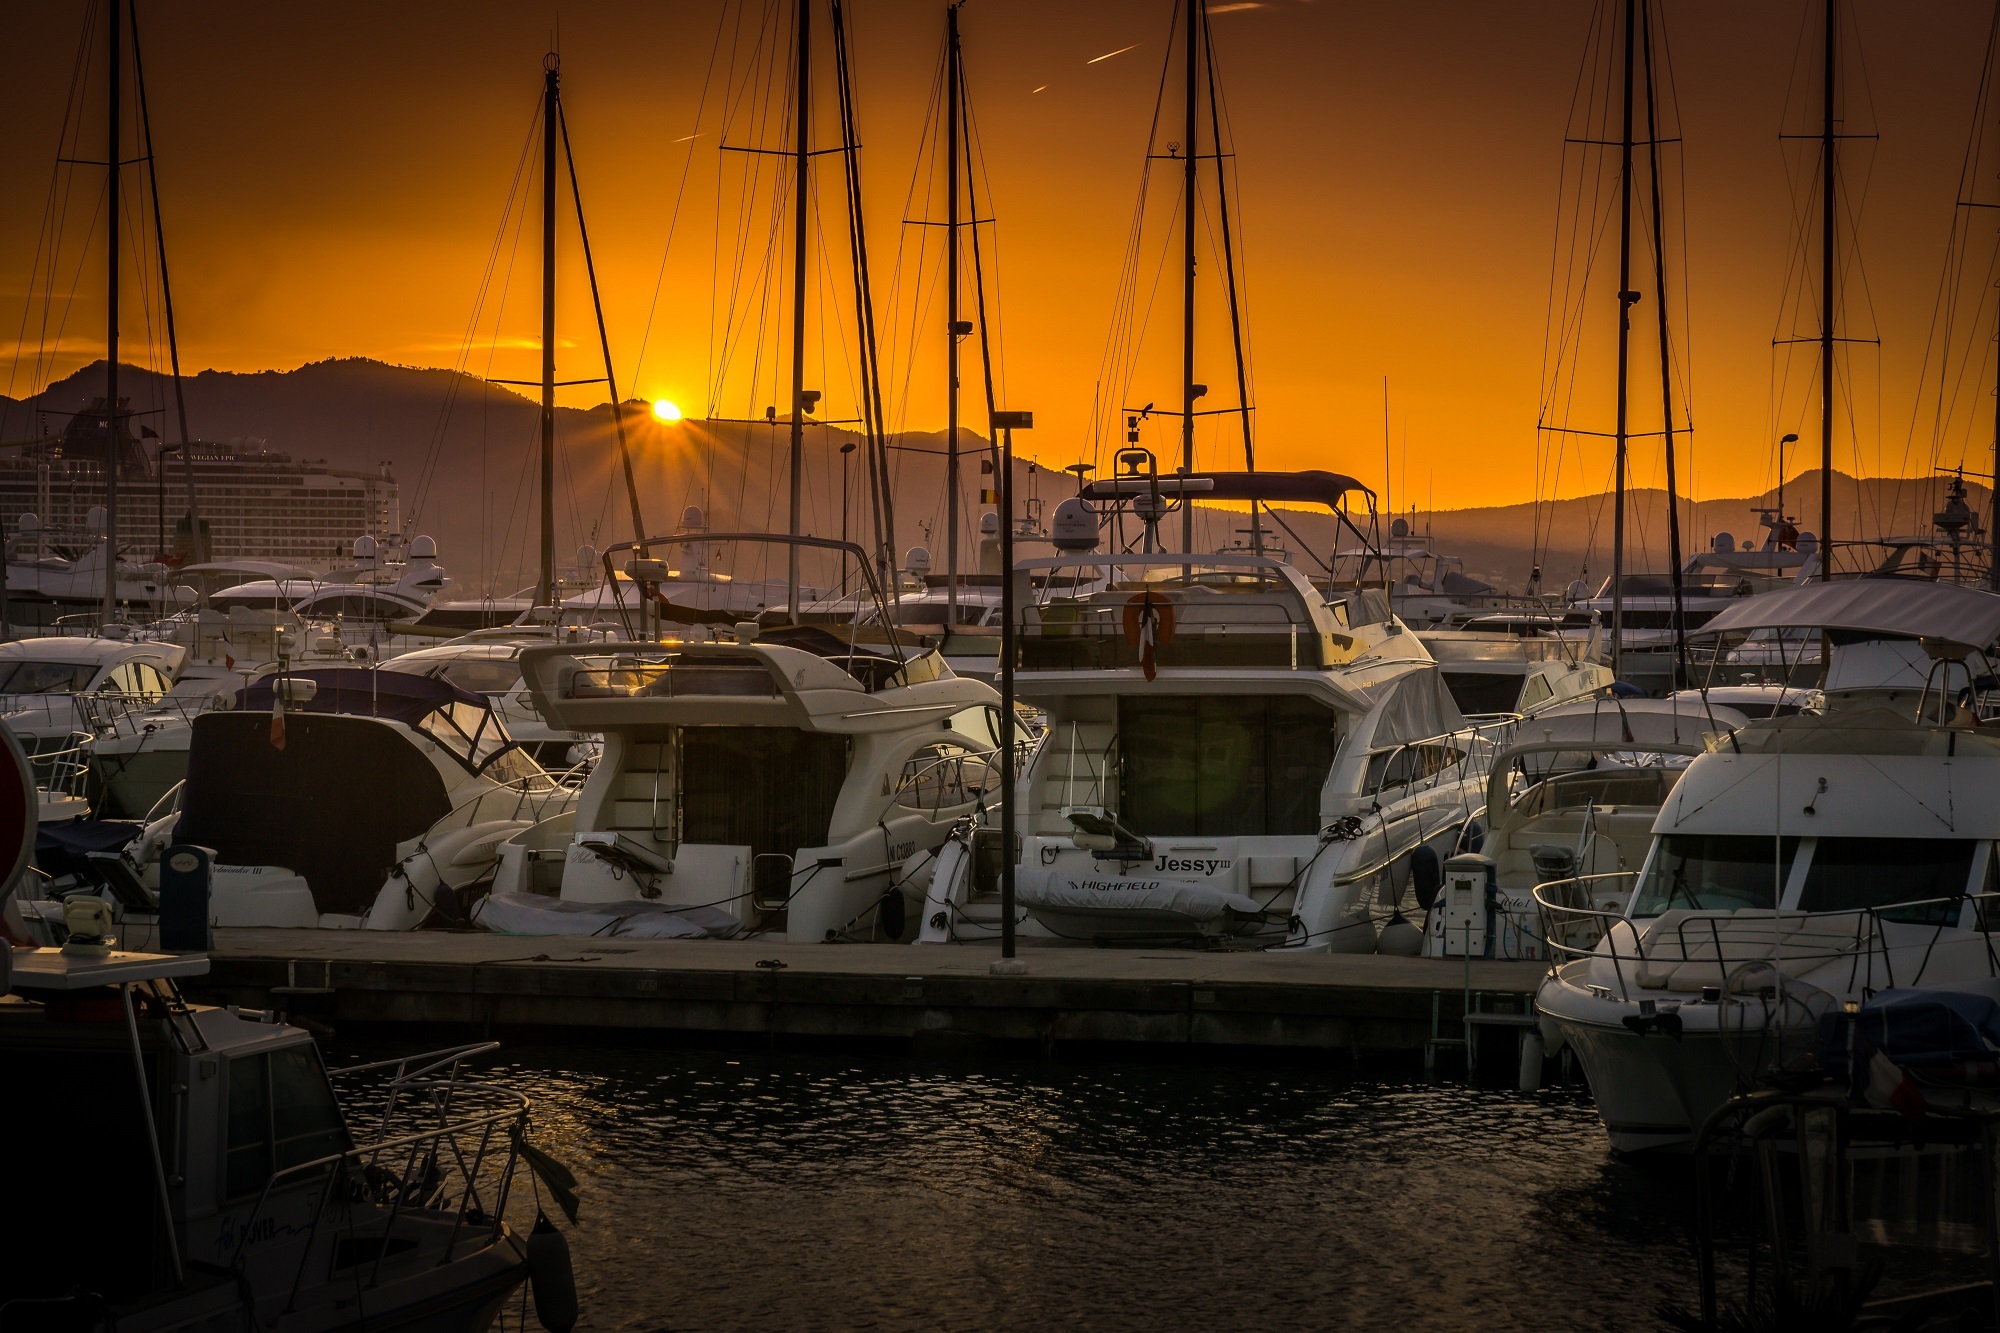 Sunset on the port photo